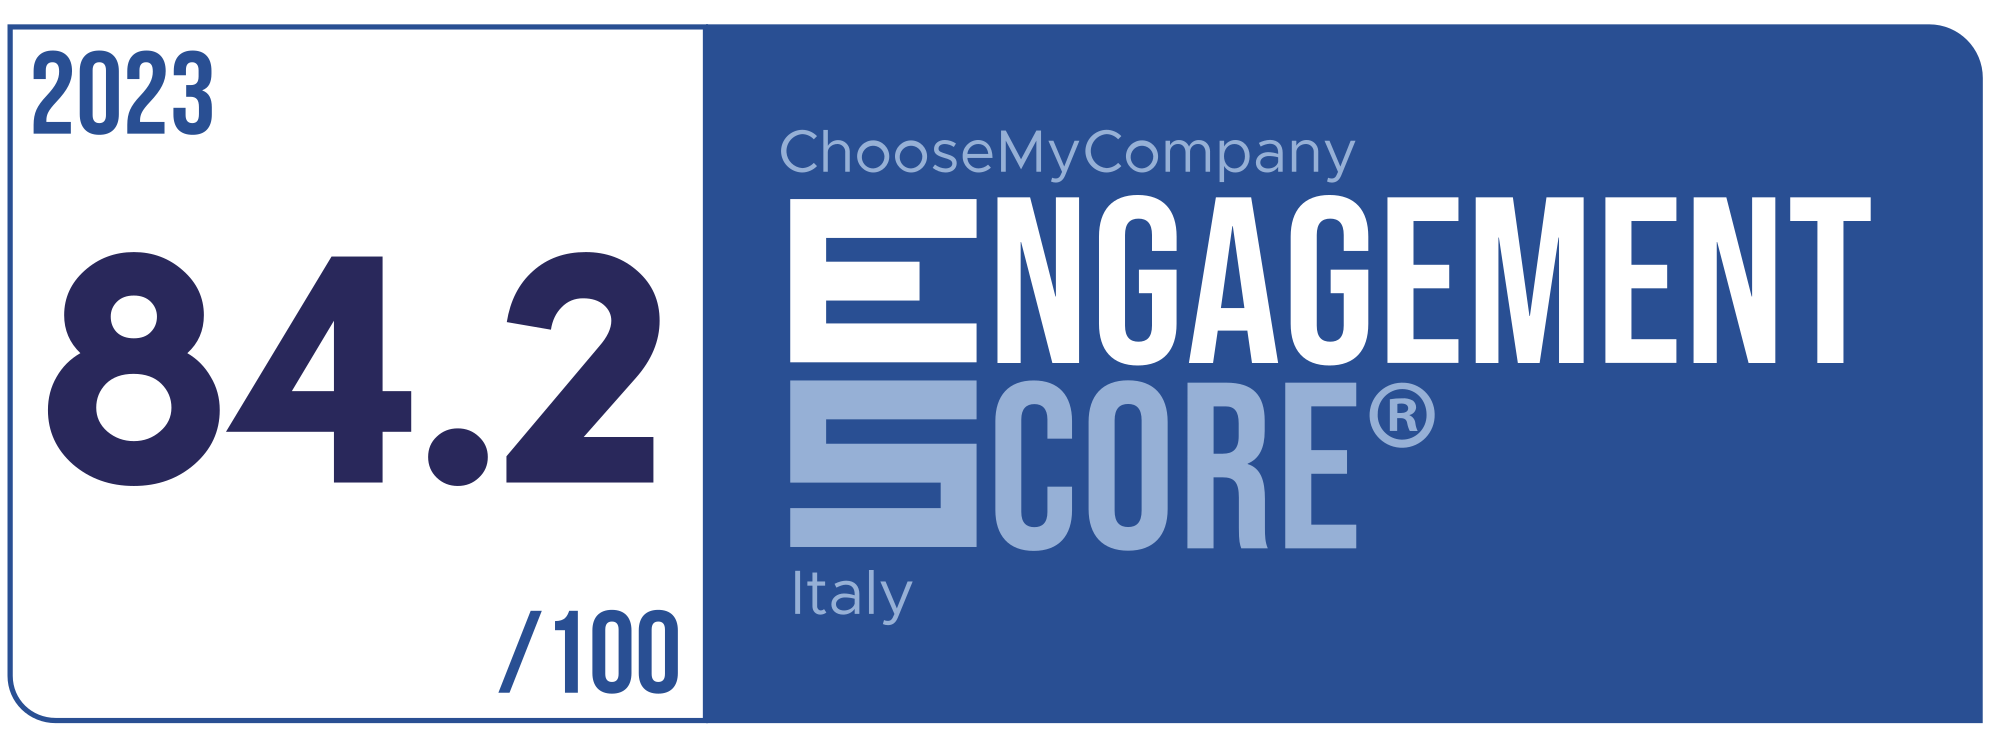 Label Engagement Score 2023 Italy